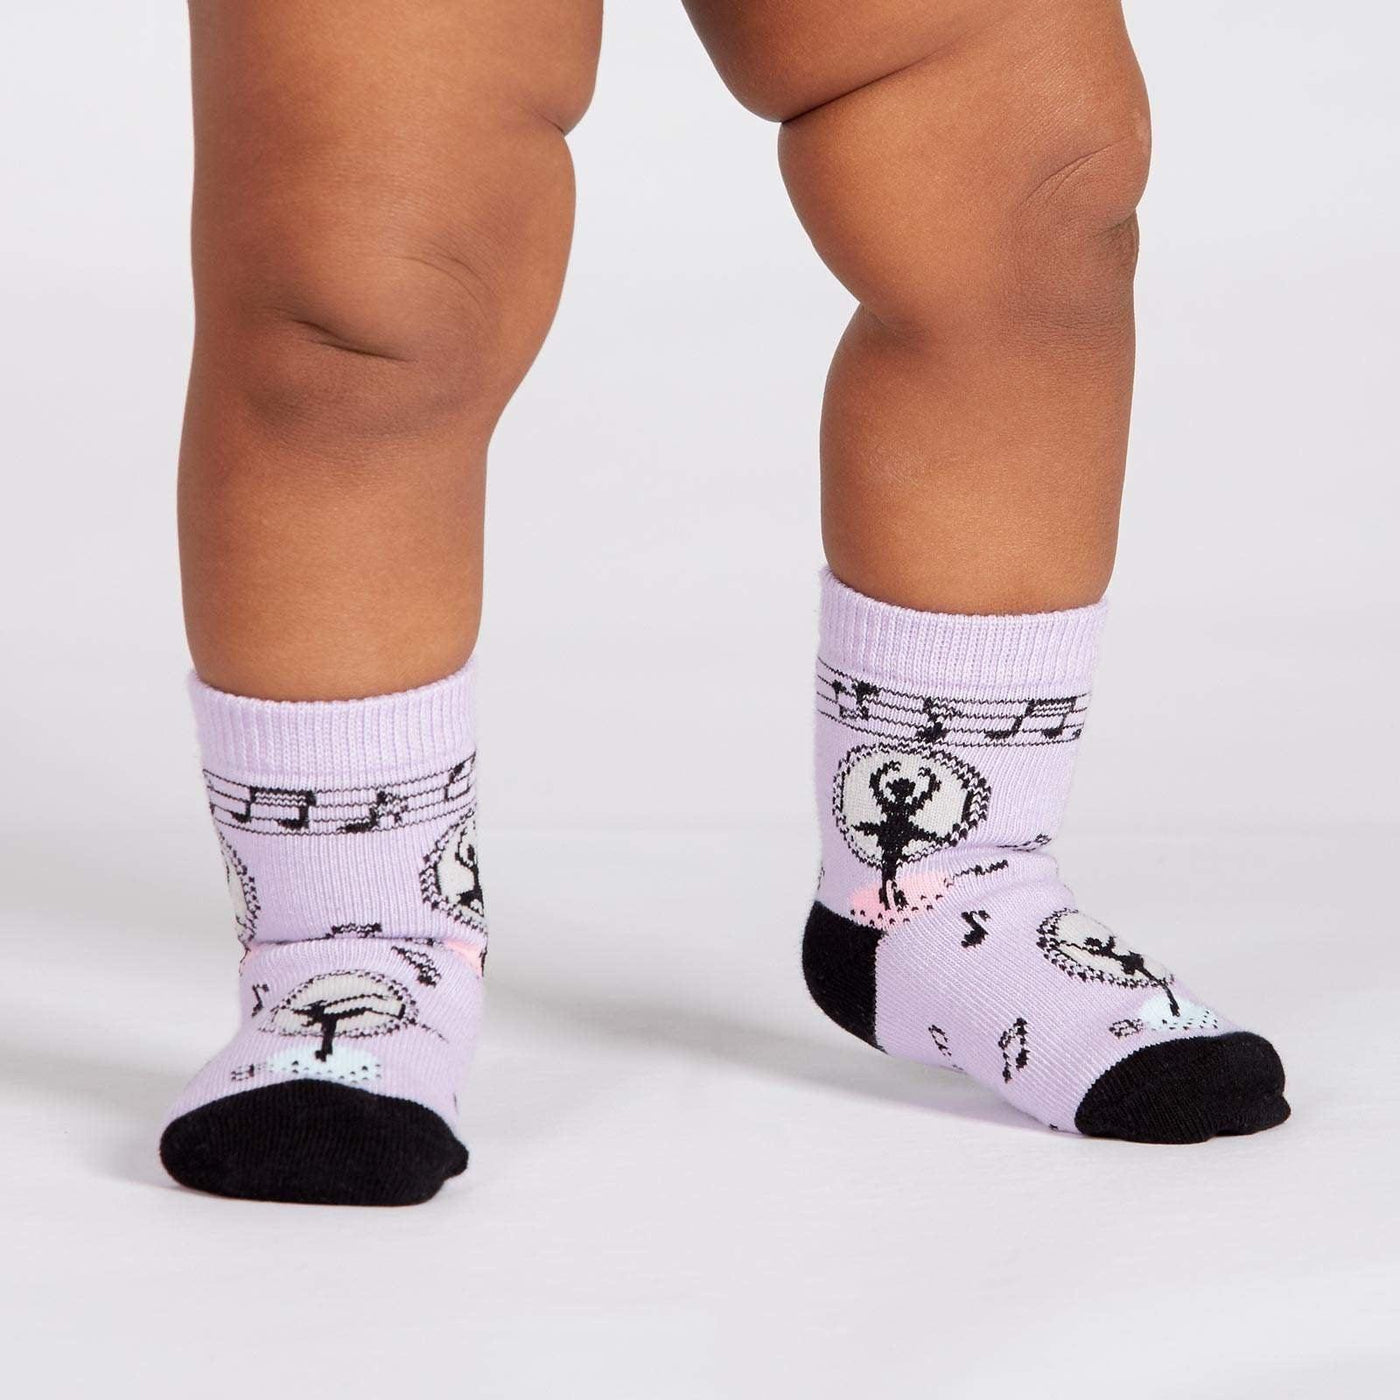 Tiny Dancer, Toddler Crew - Sock It To Me - The Sock Monster